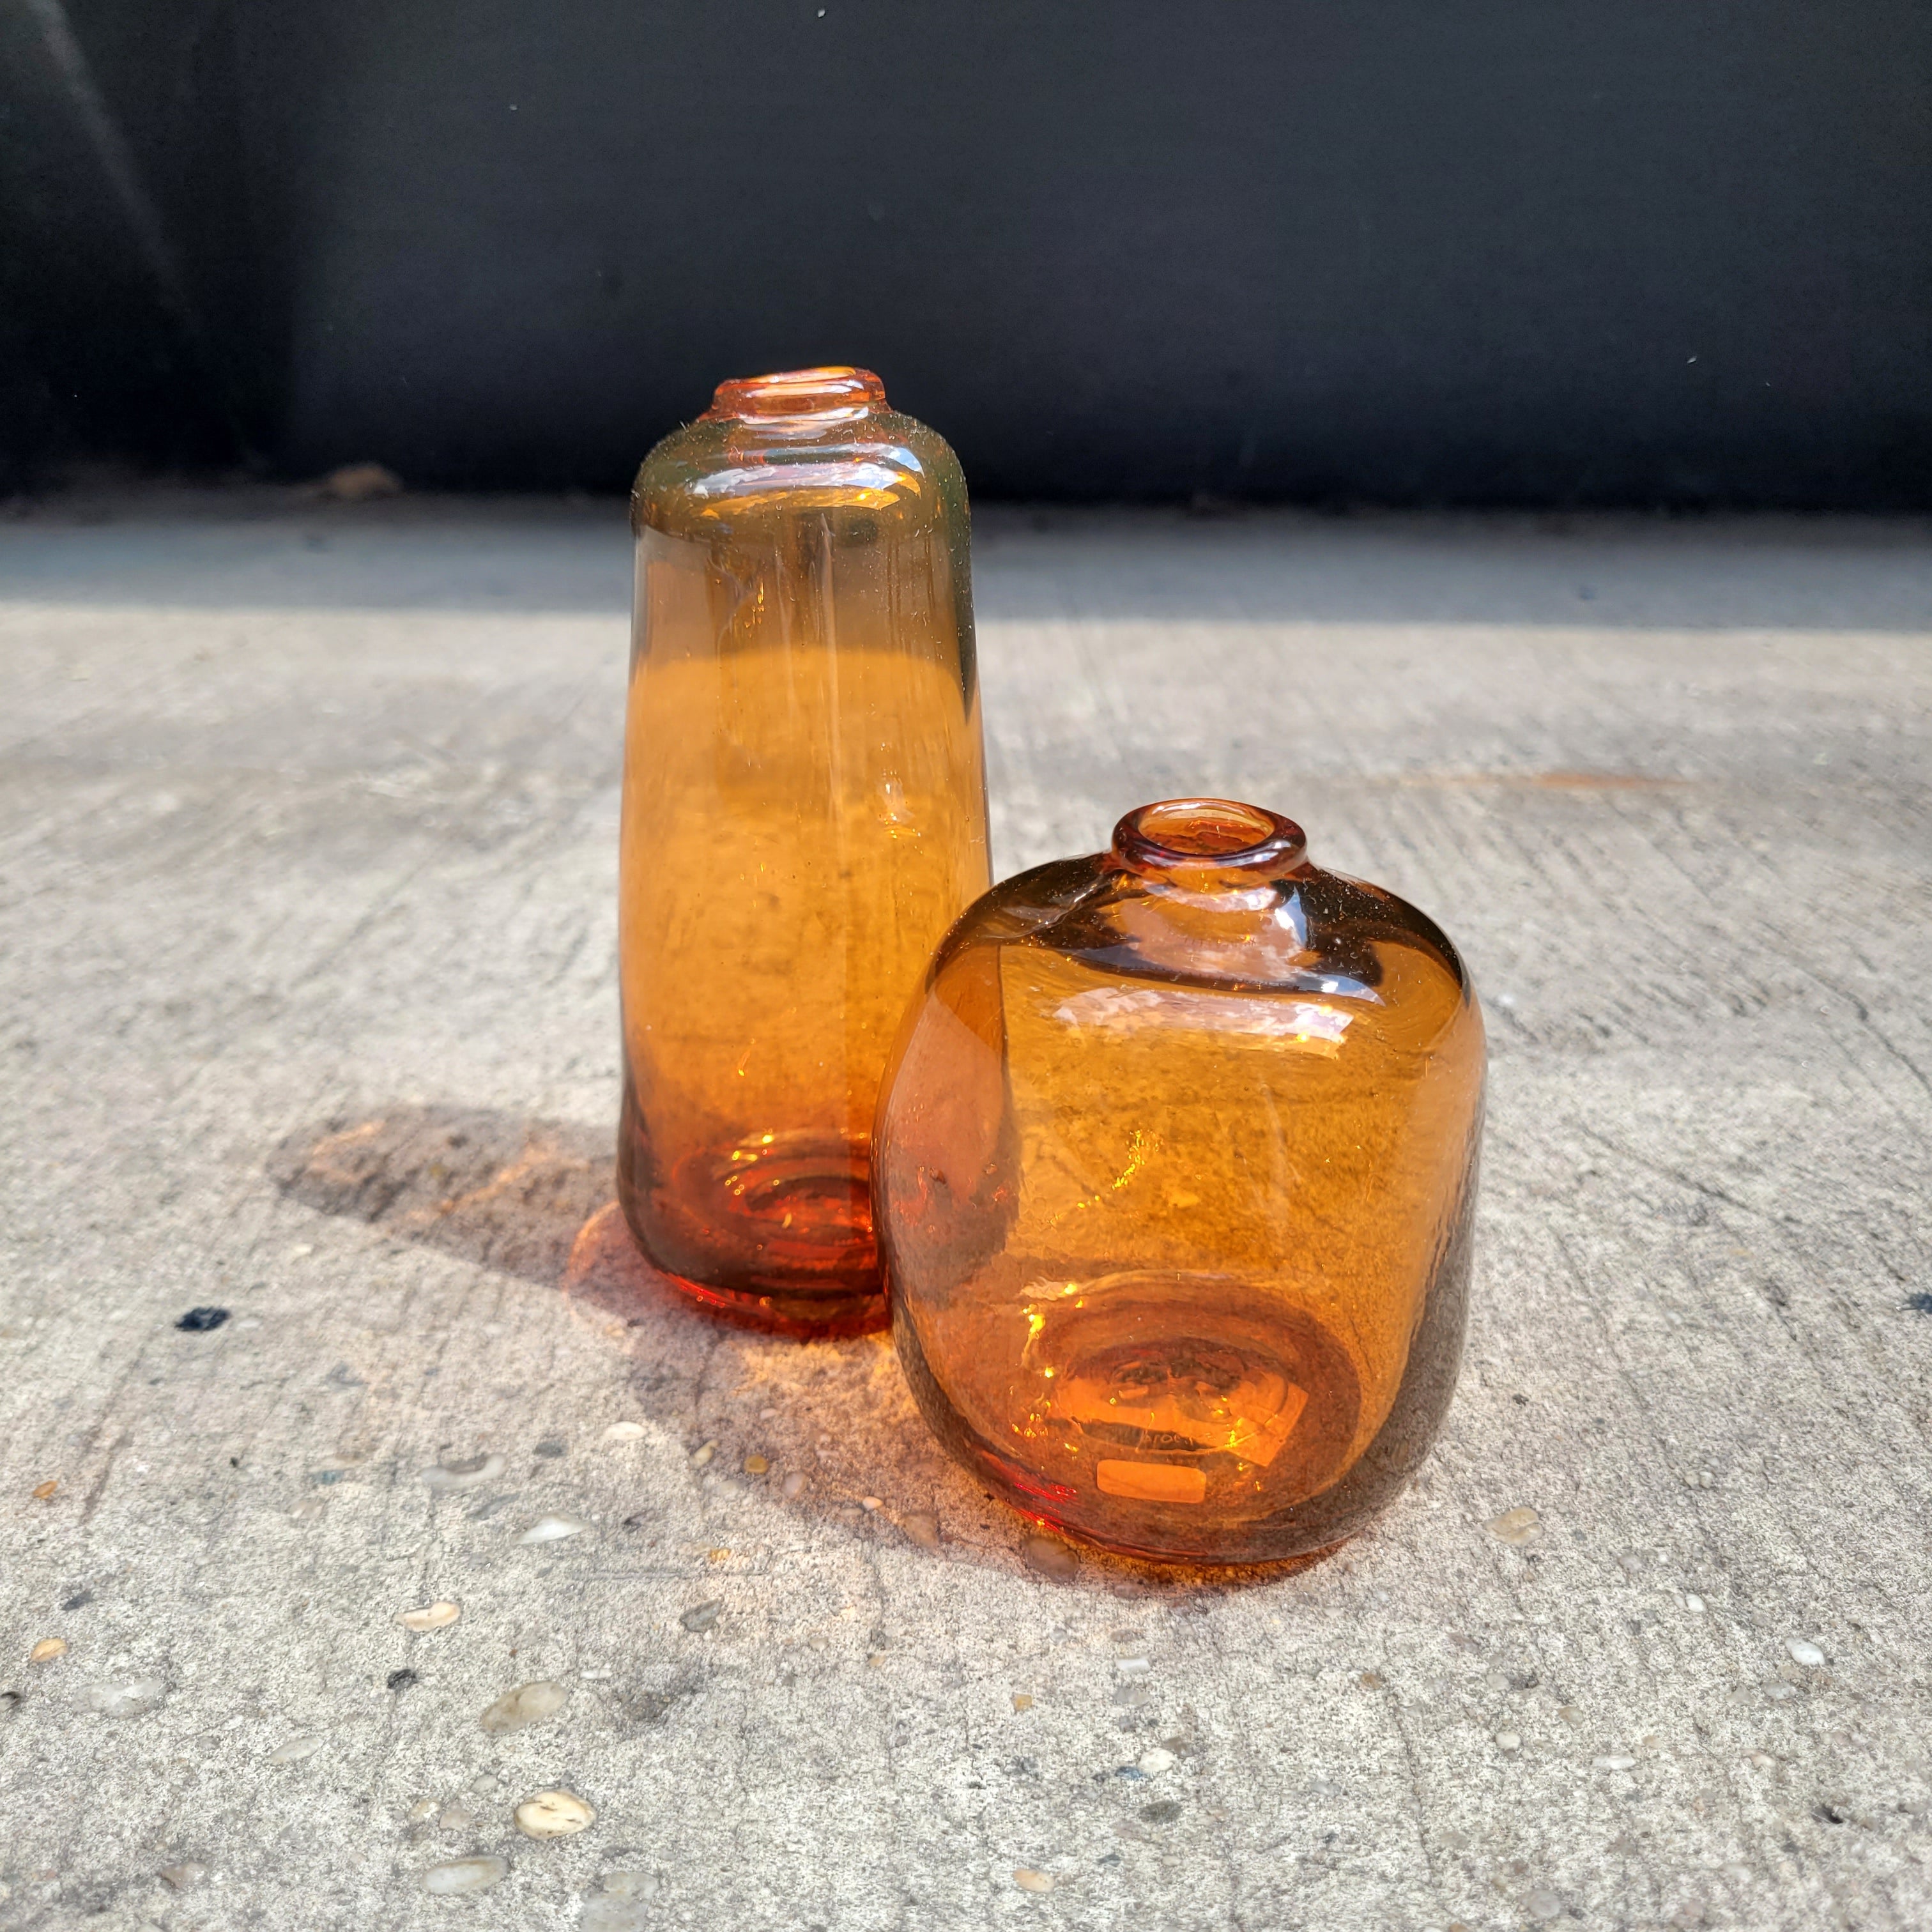 Apricot Glass Bud Vase by Gary Bodker